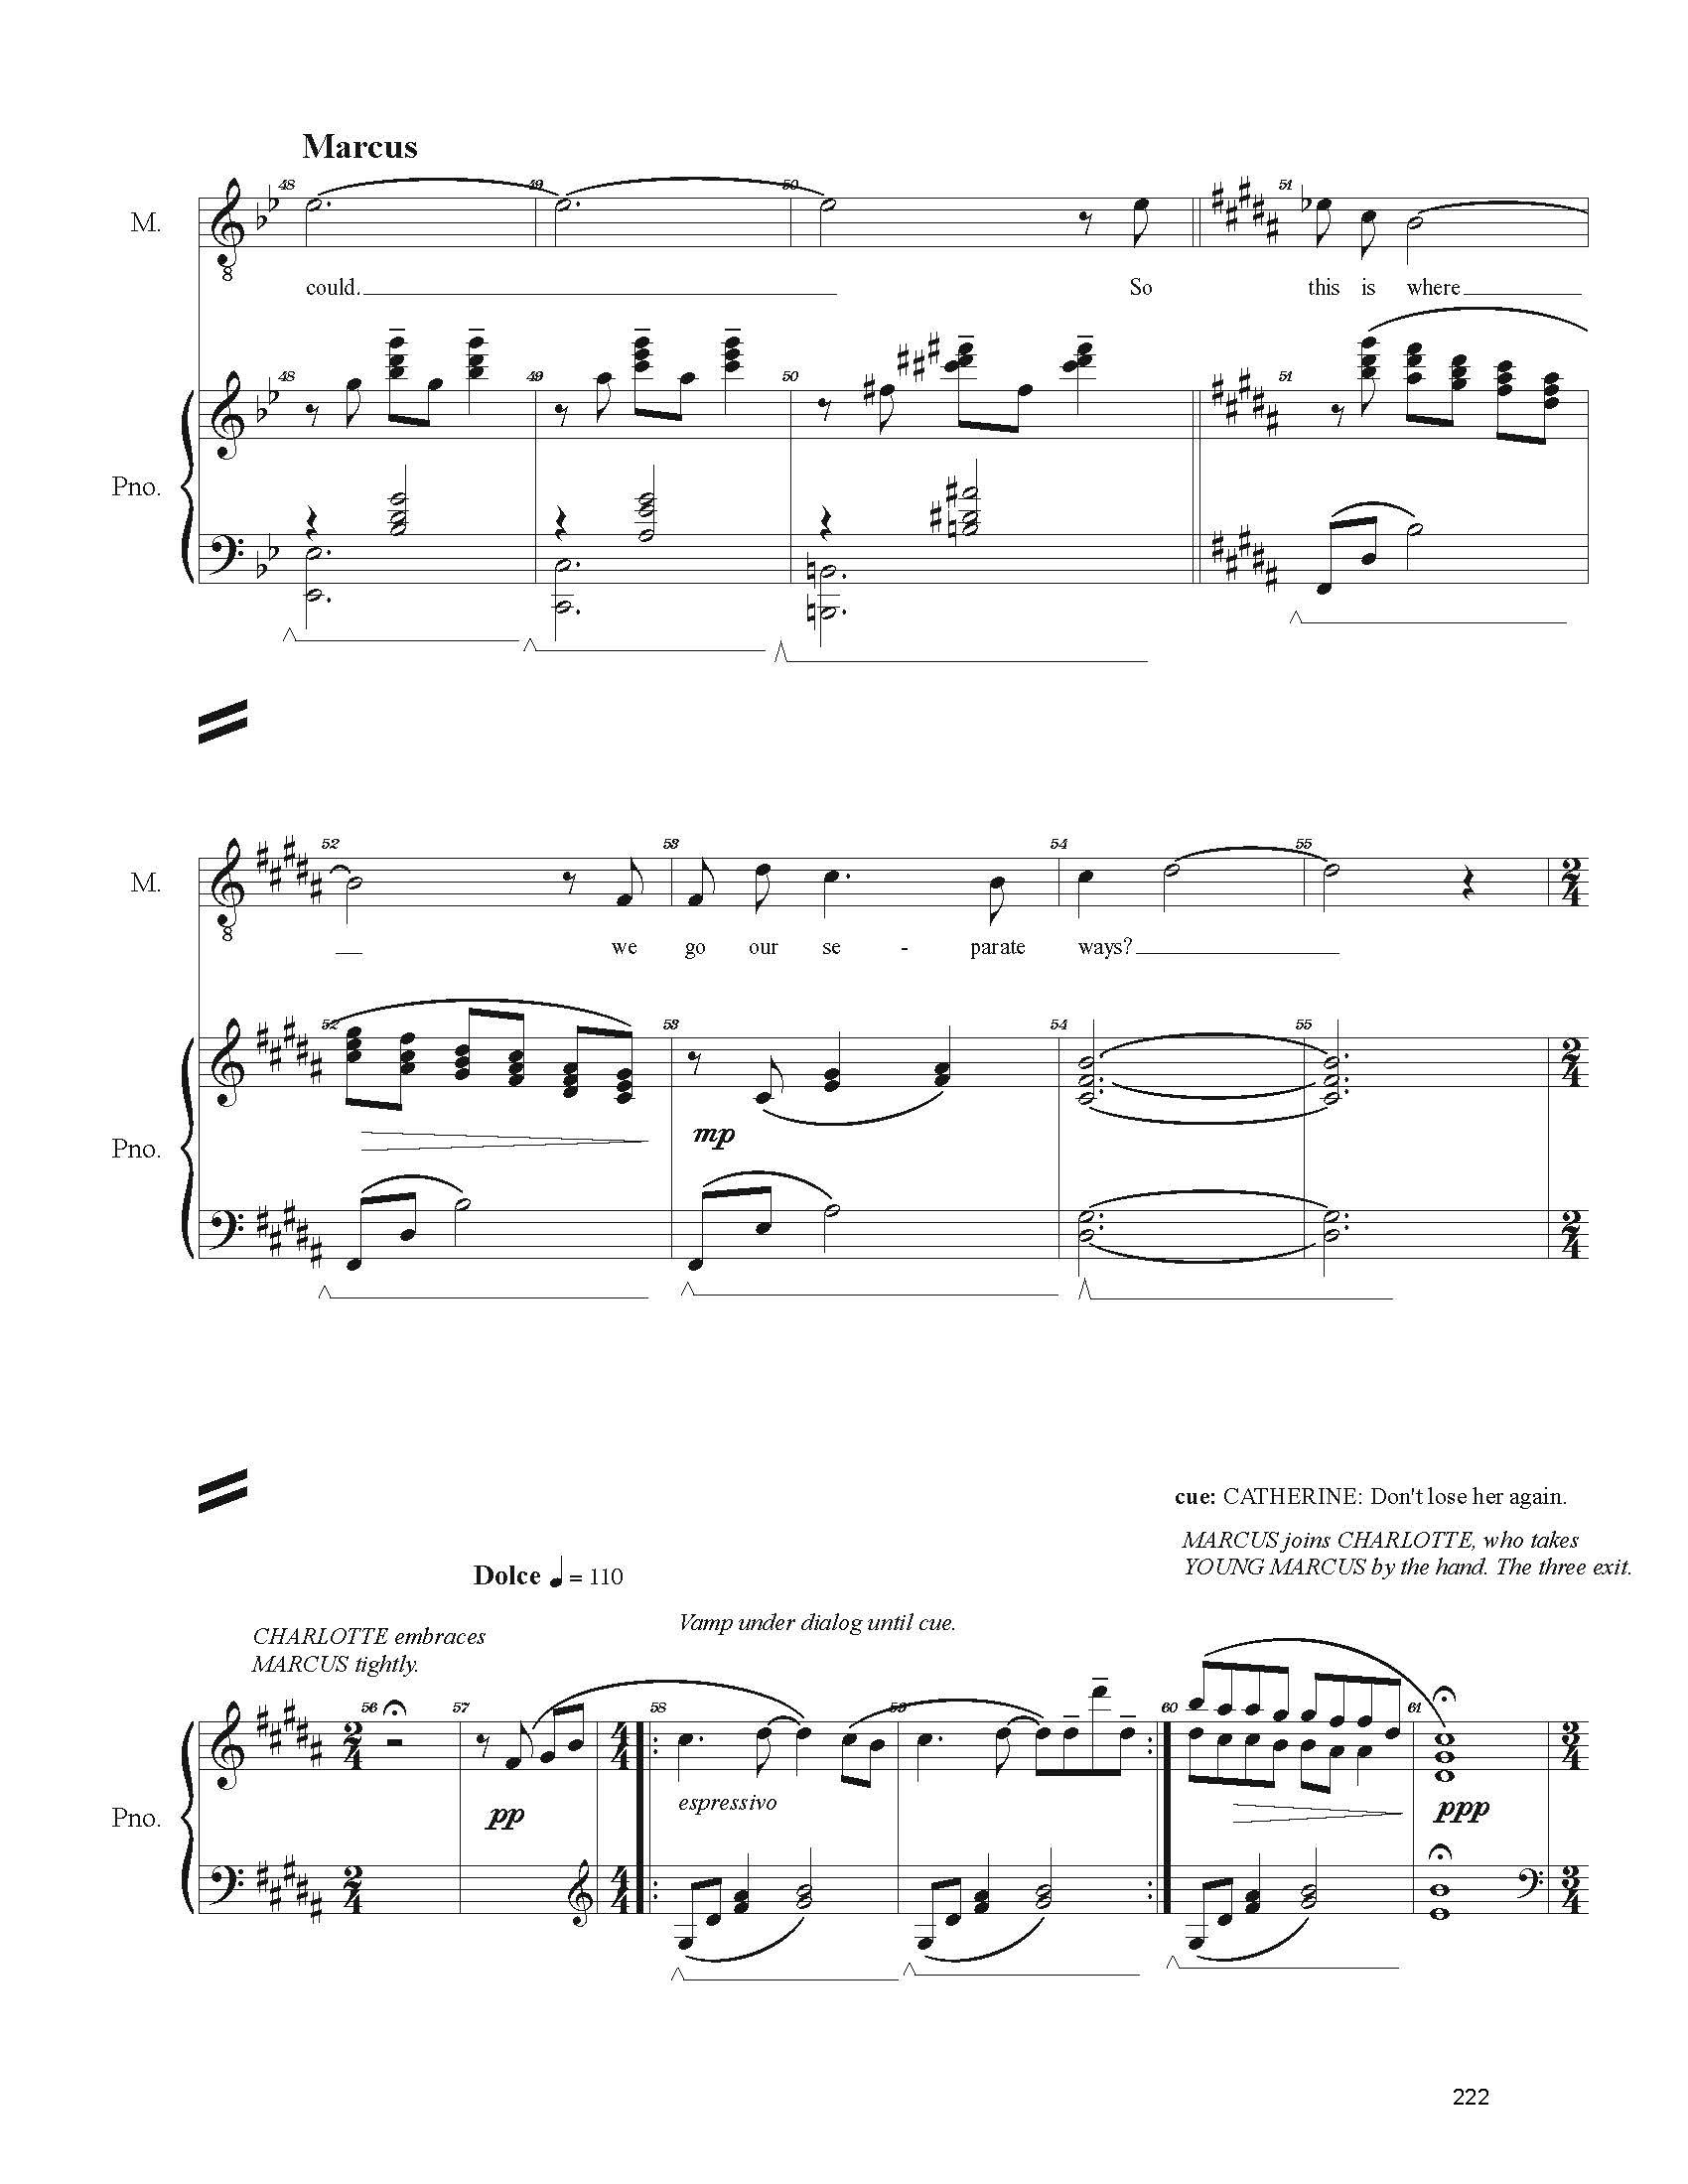 FULL PIANO VOCAL SCORE DRAFT 1 - Score_Page_222.jpg